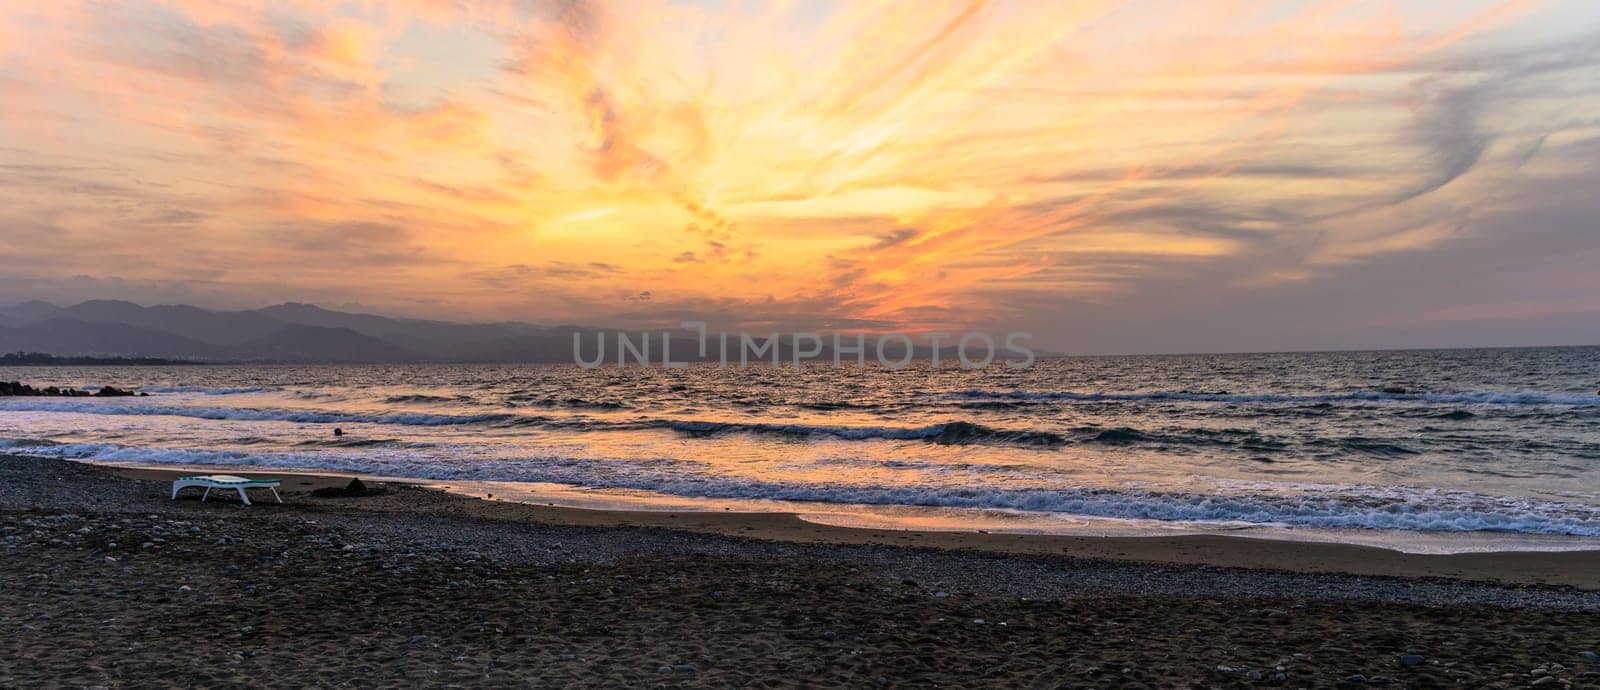 beautiful sunset autumn sky on the shores of the Mediterranean sea